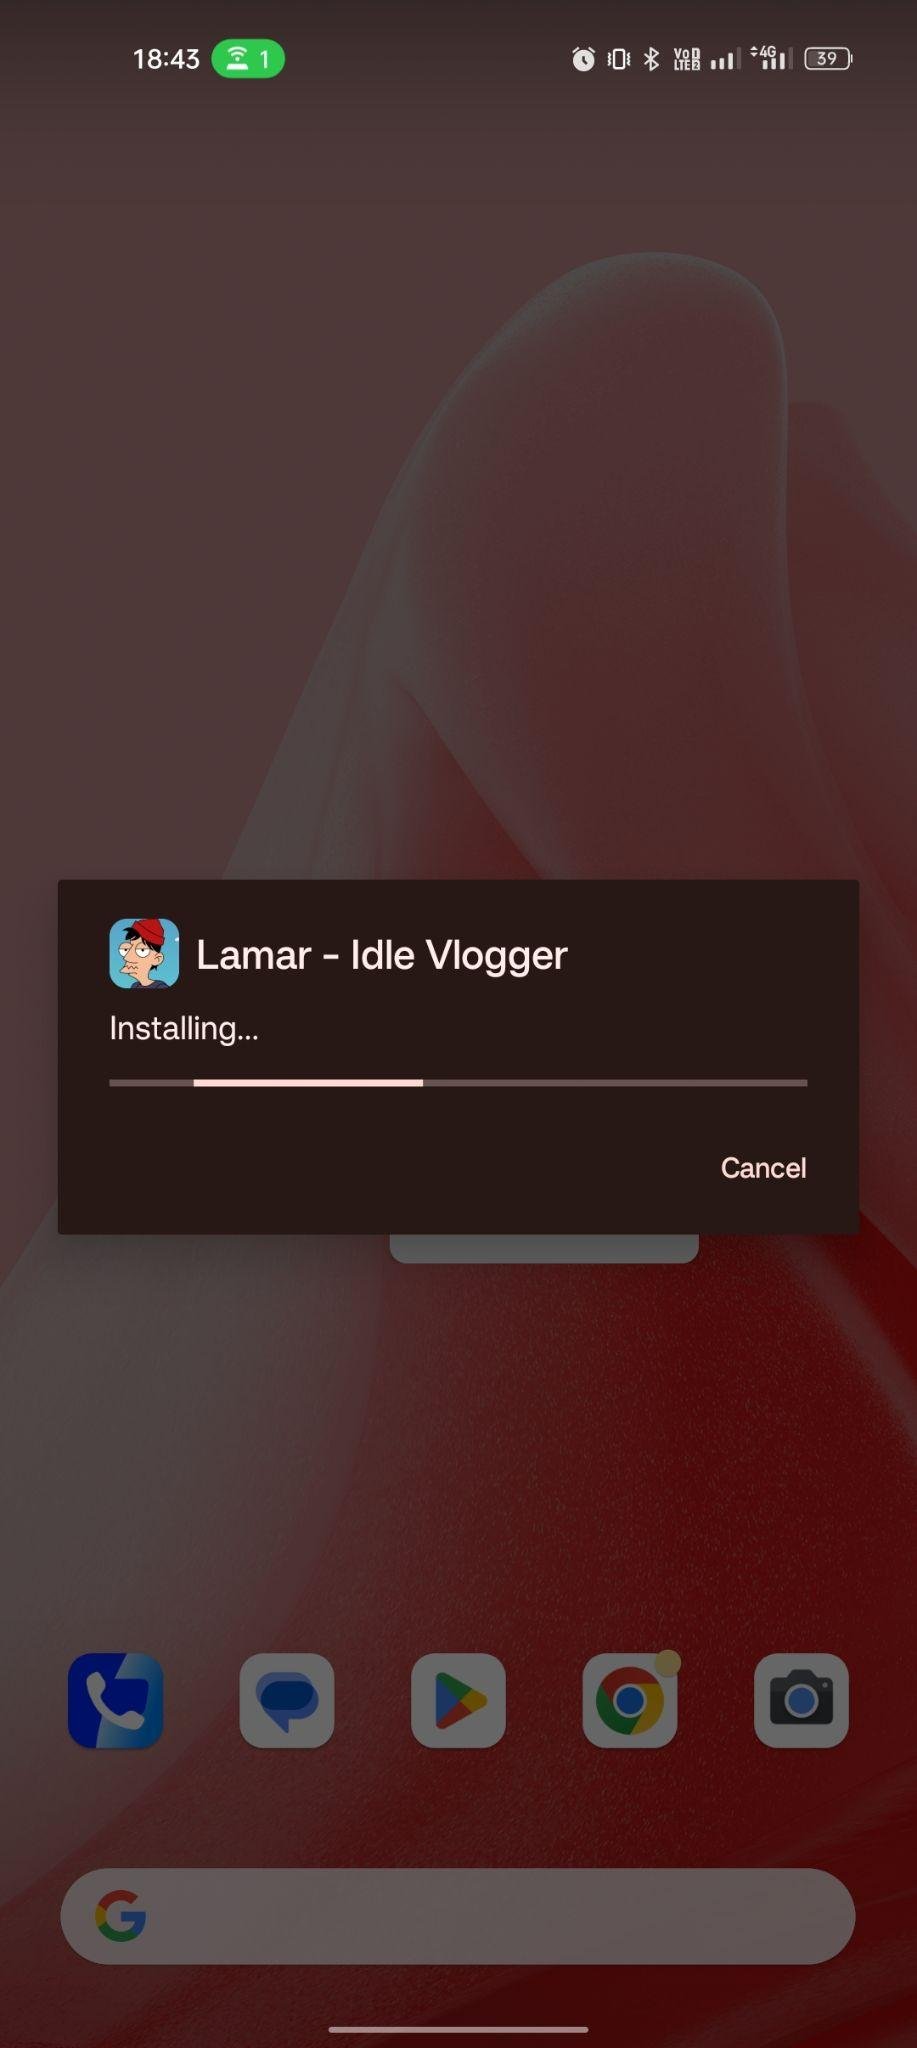 Lamar - Idle Vlogger apk installing